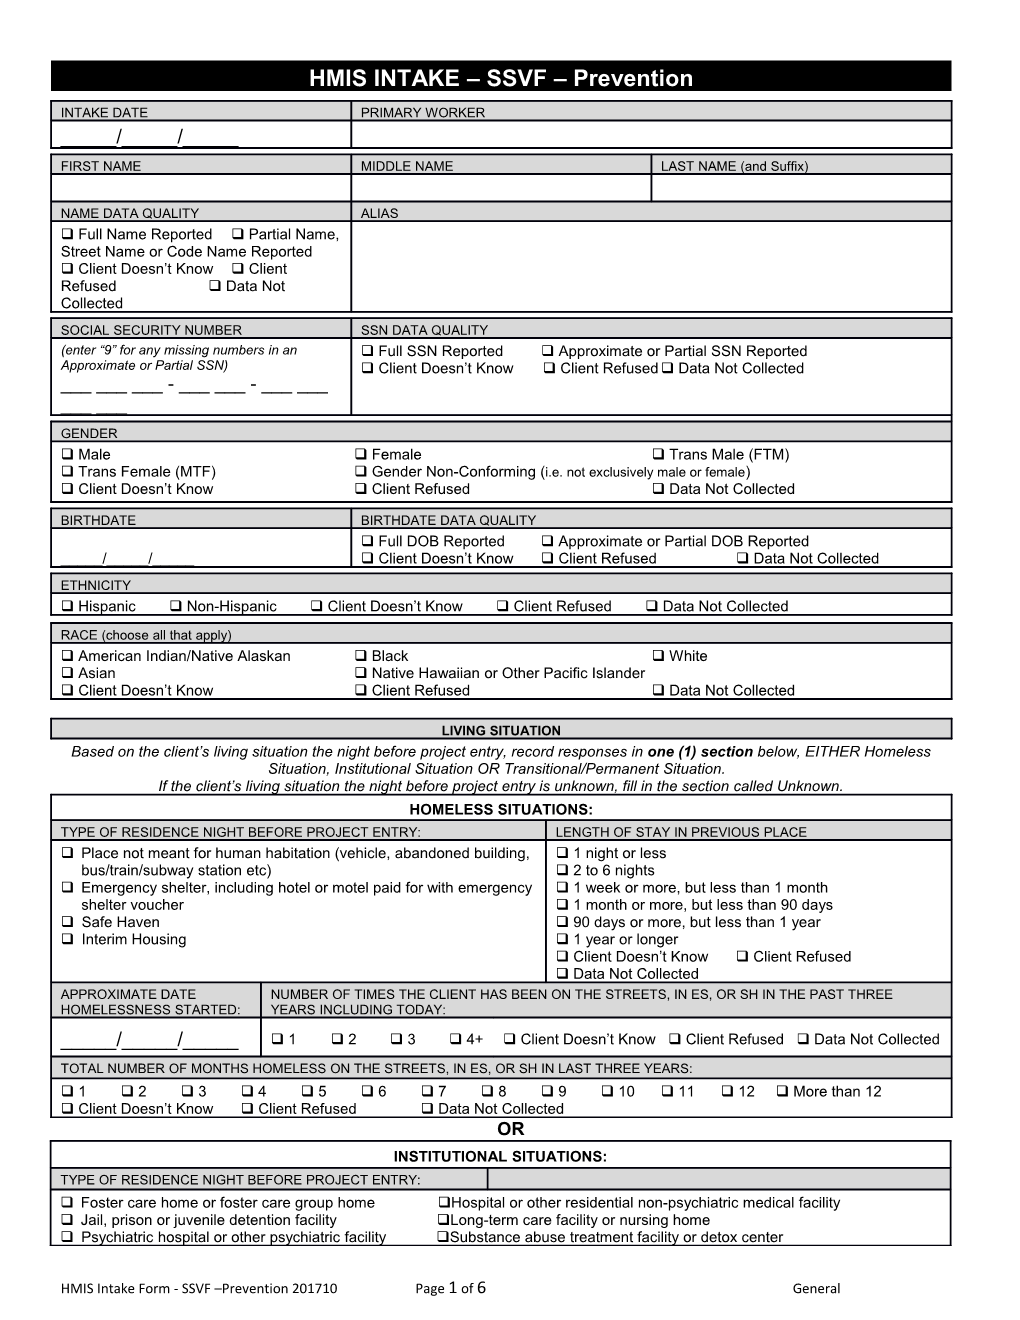 CARES Regional HMIS Consumer Information Consent Form